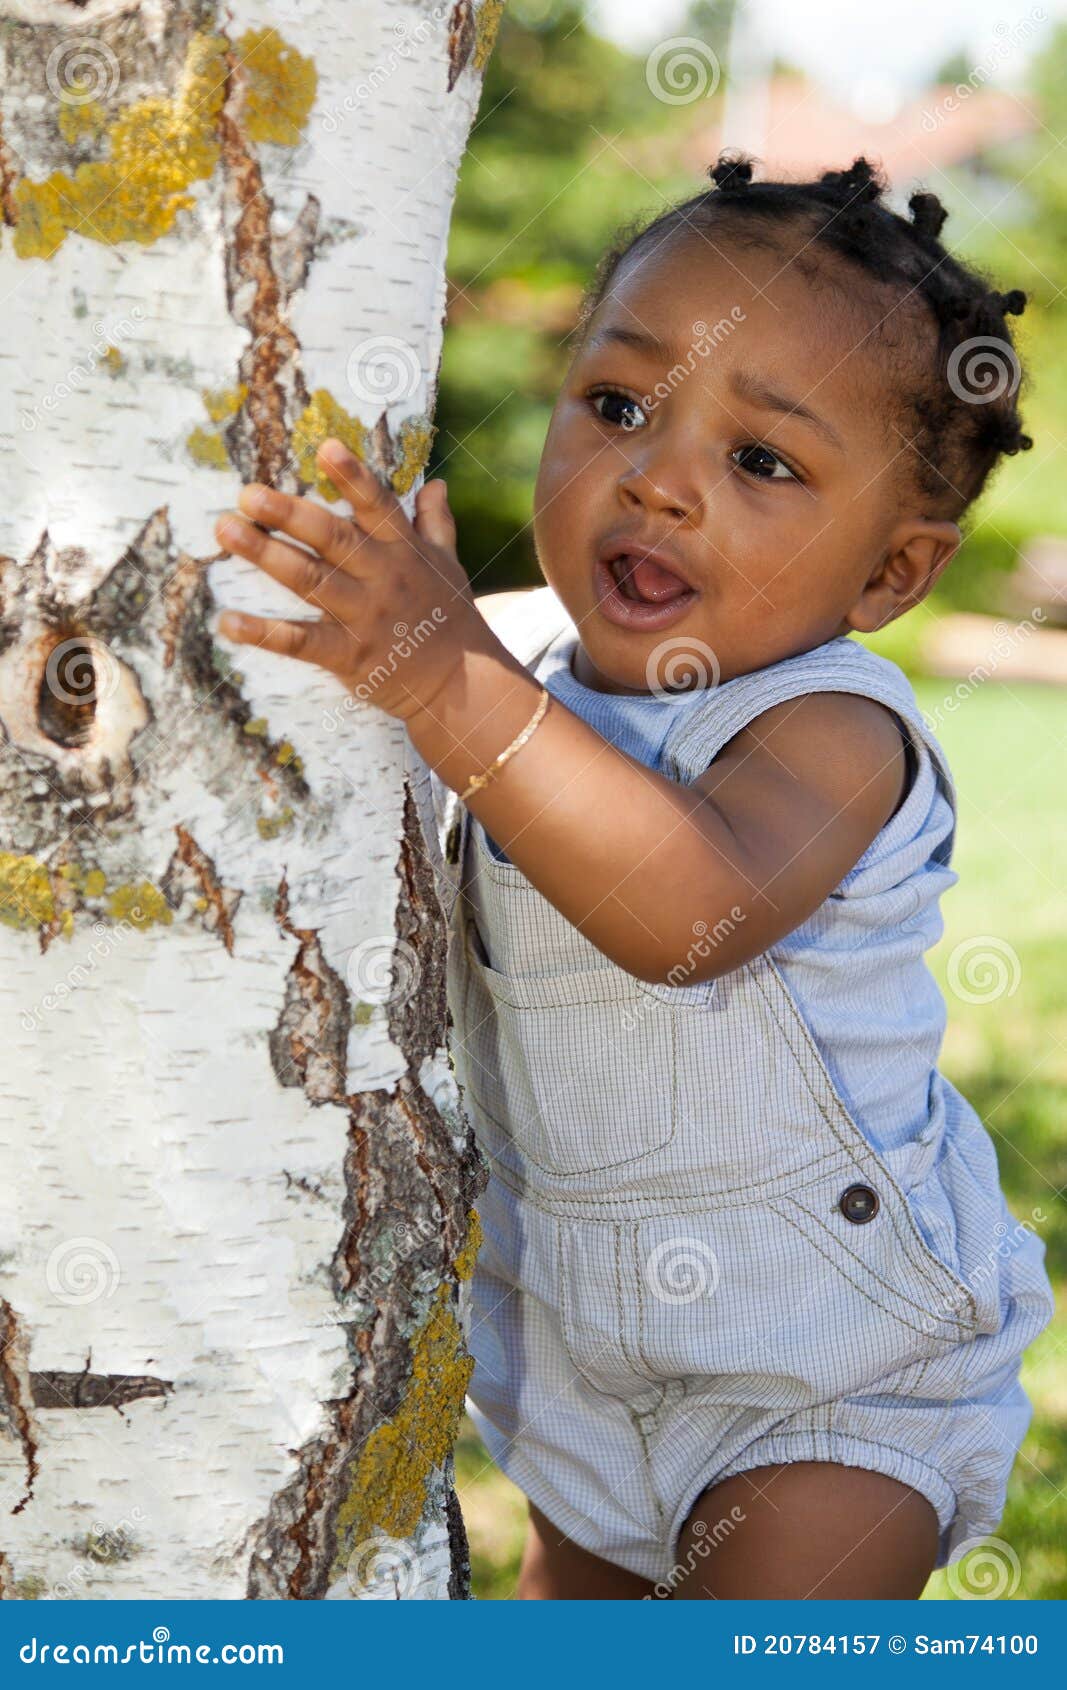 Image of cute babies african american